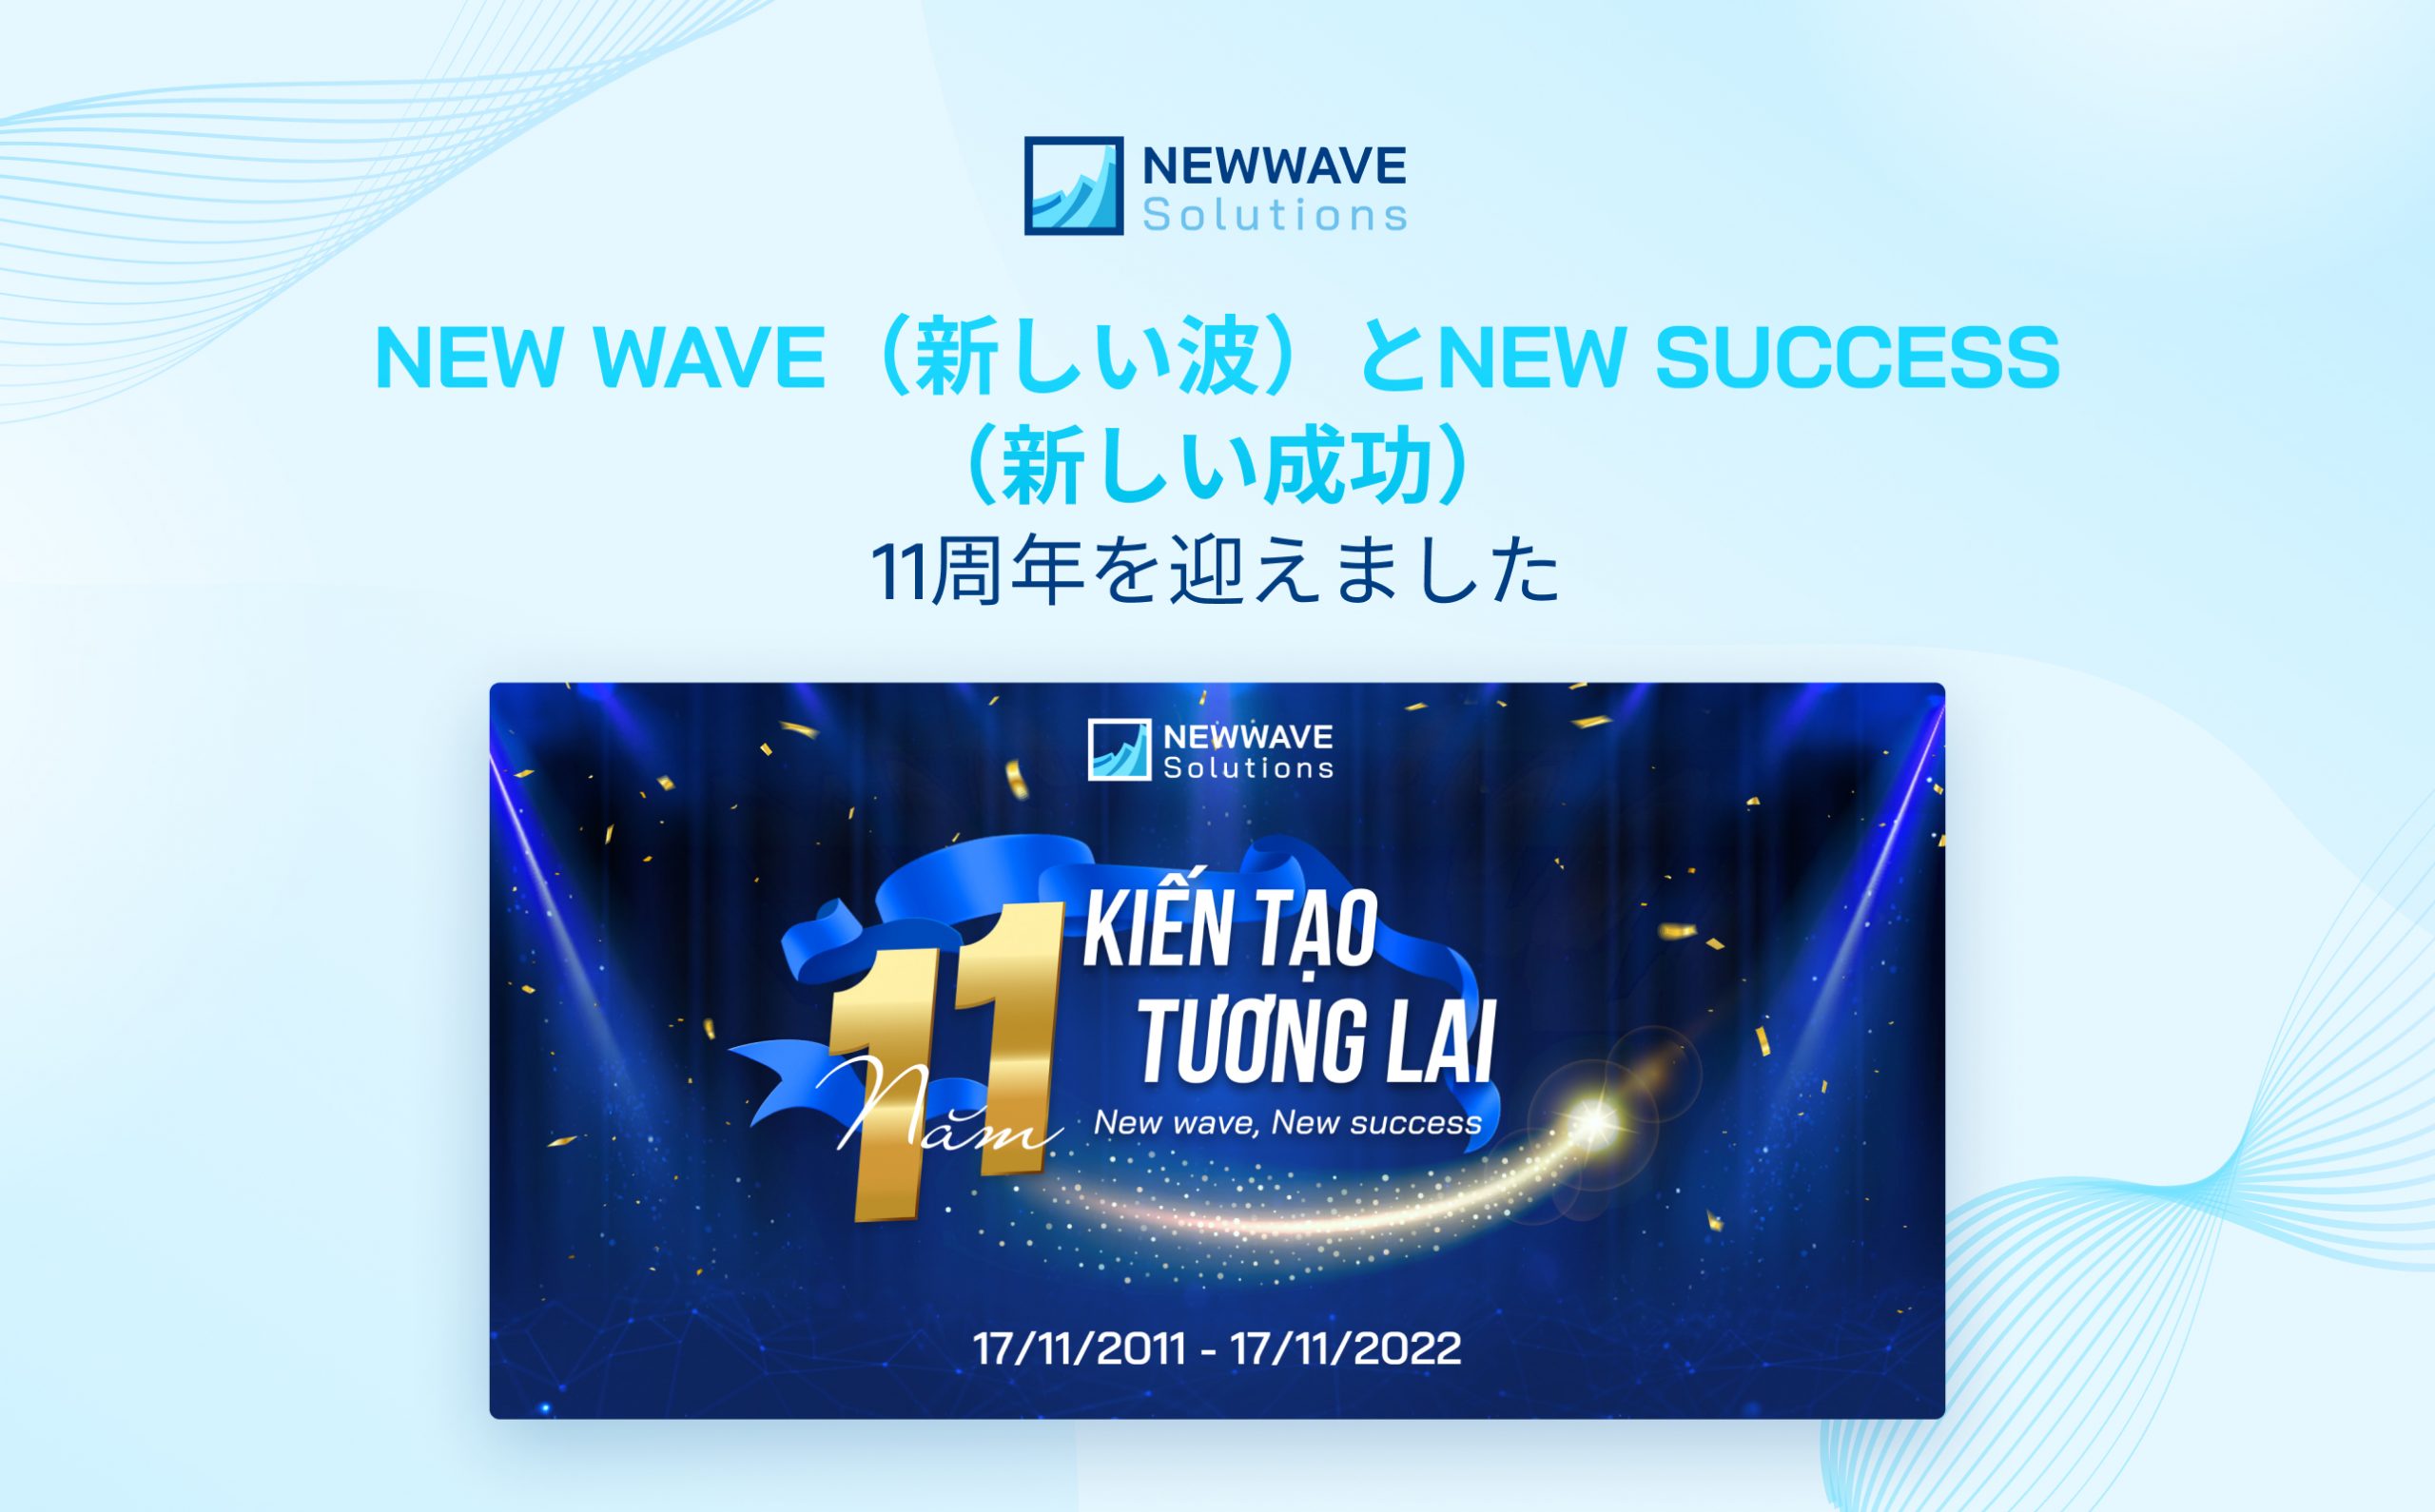 Newwave Solutions 11 years anniversary